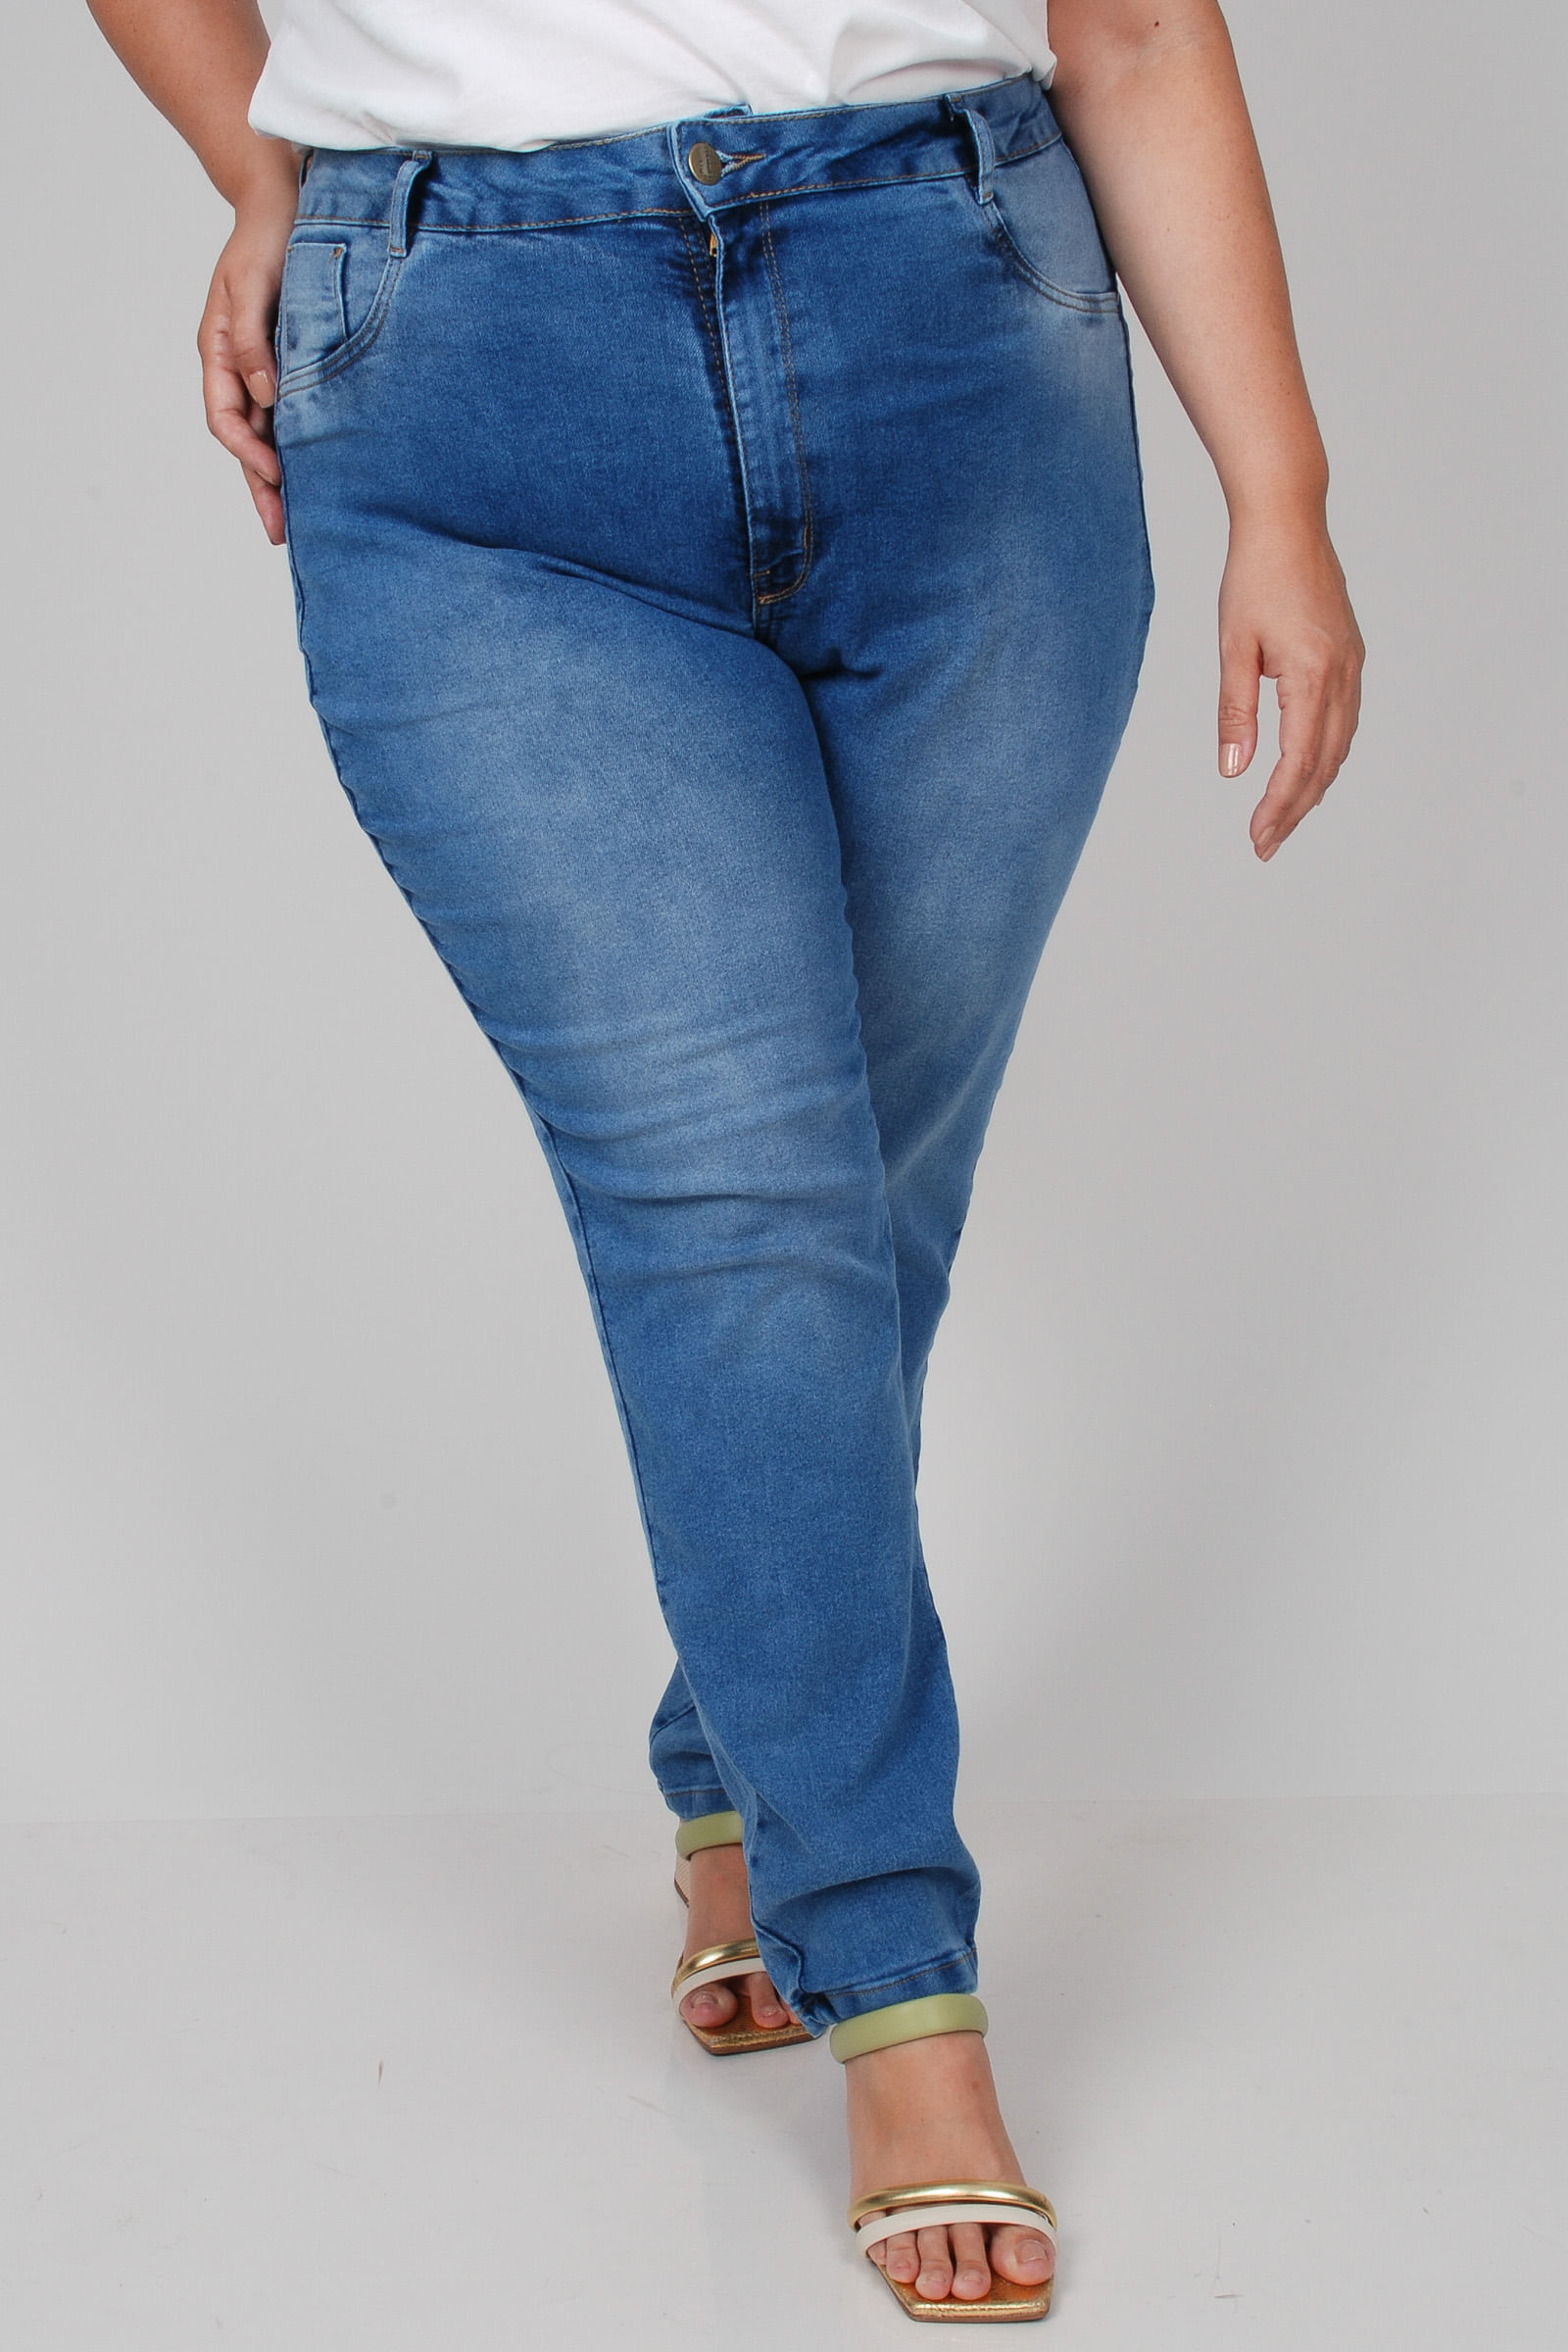 Calca-skinny-blue-jeans-plus-size_0102_1